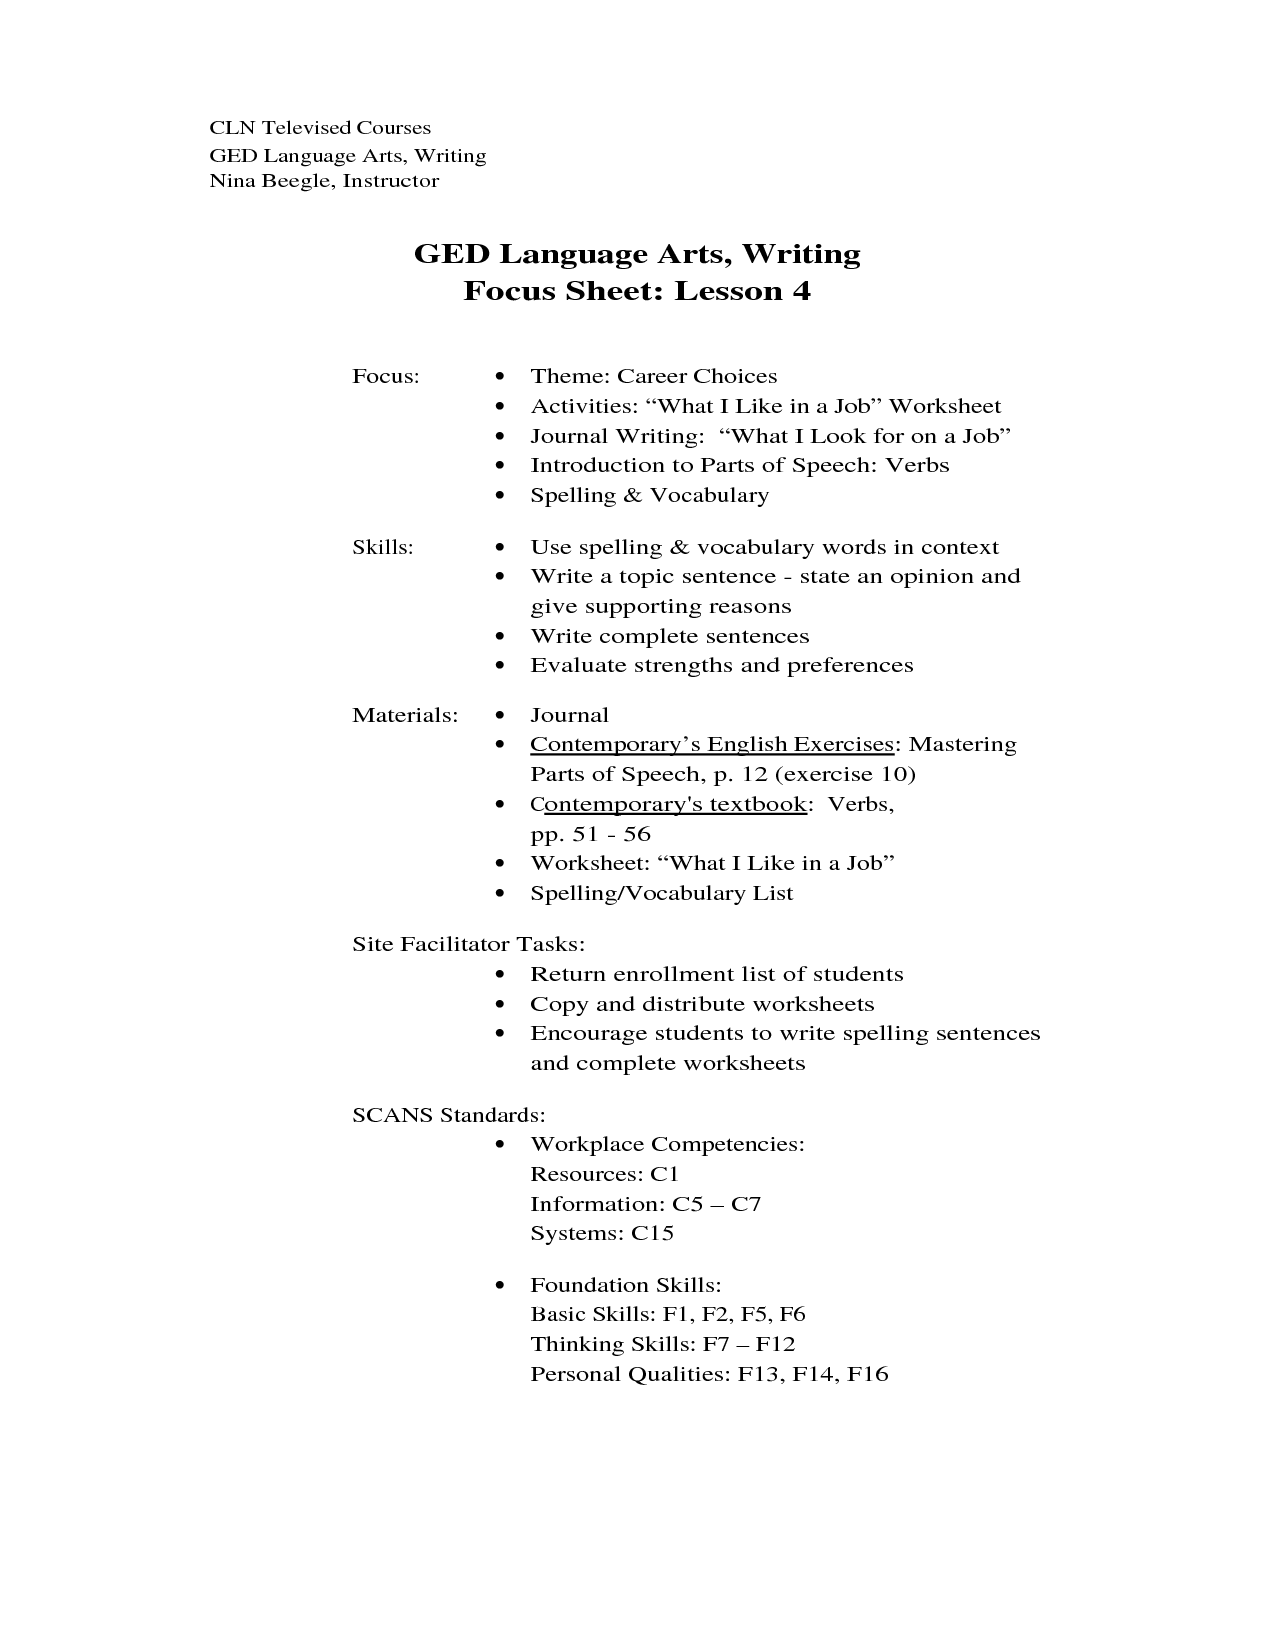 GED Language Arts Writing Worksheets Image